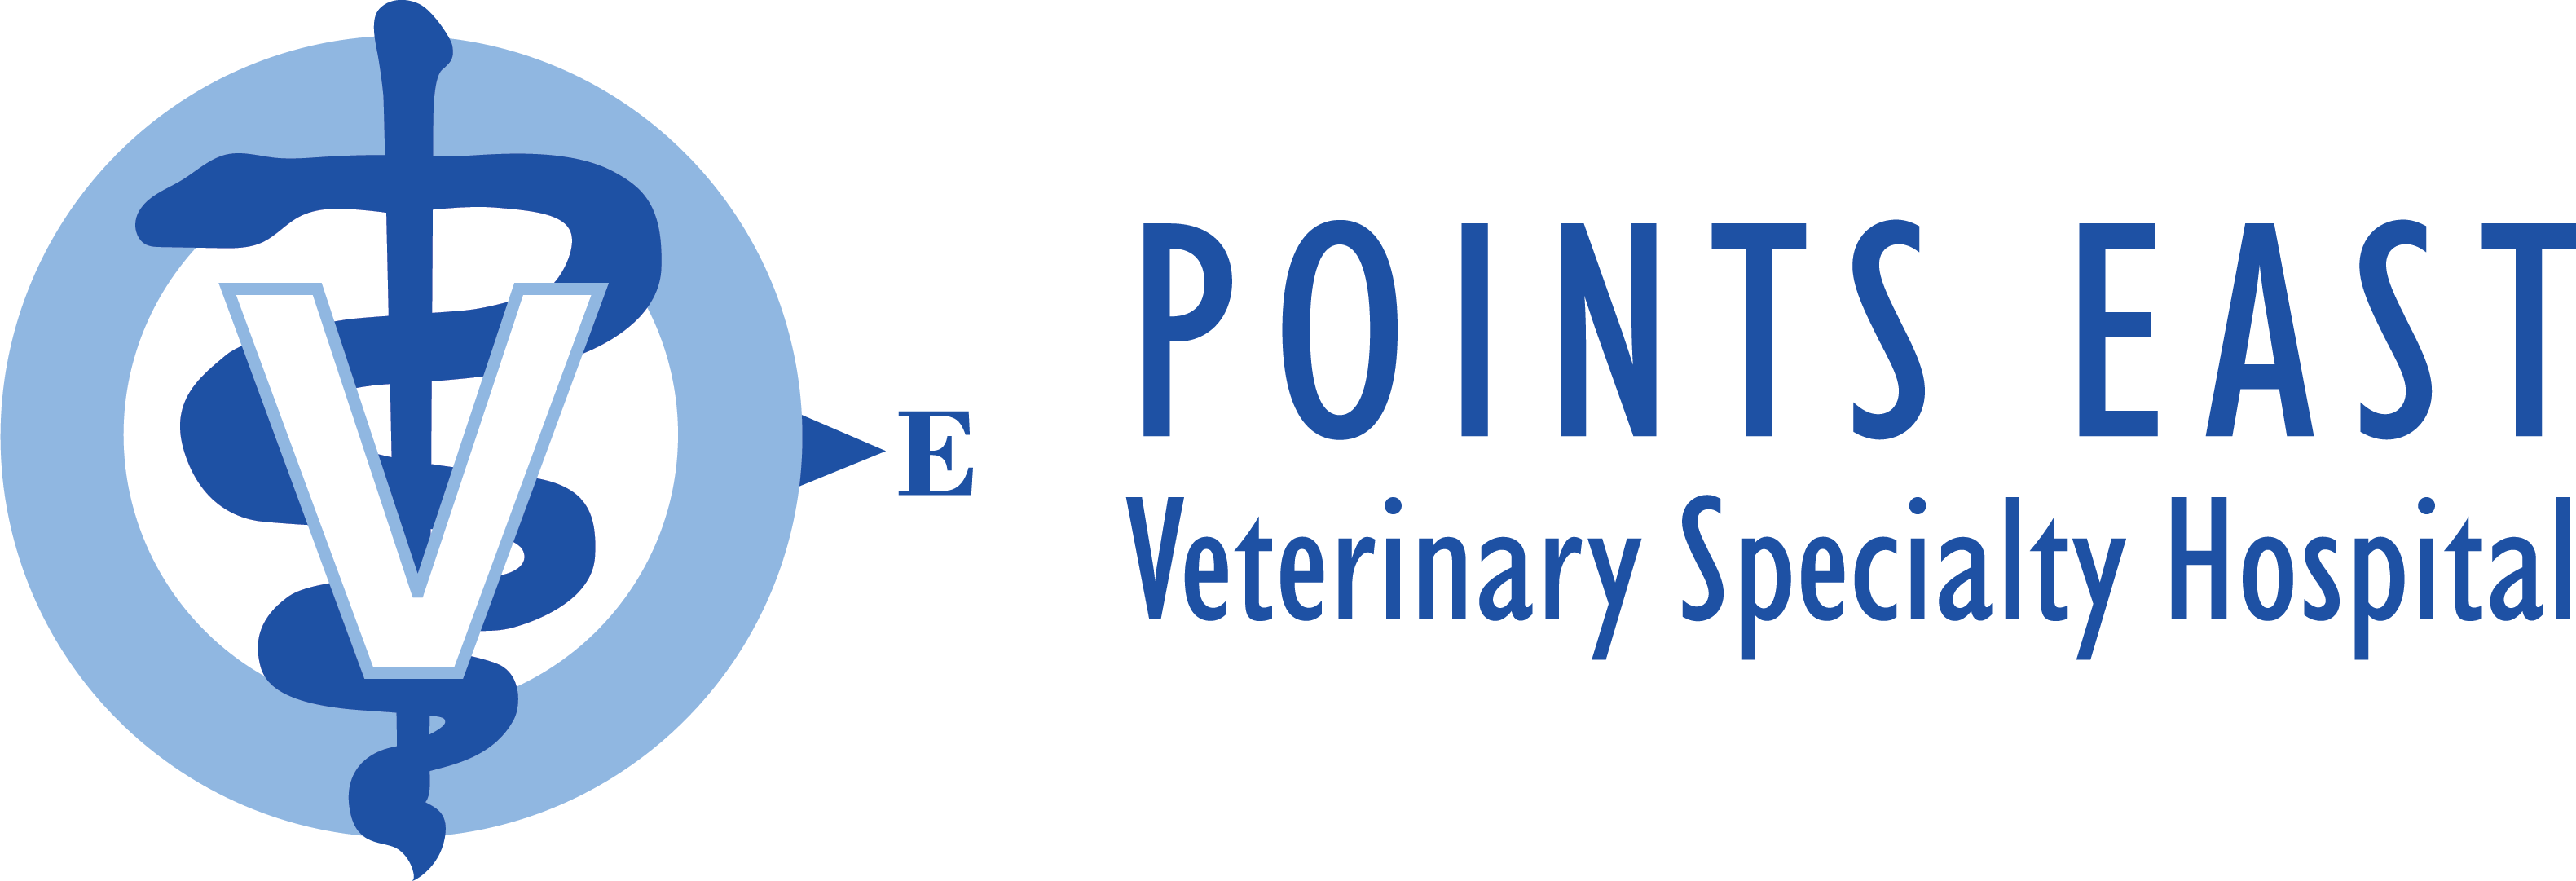 Points East Veterinary Specialty Hospital